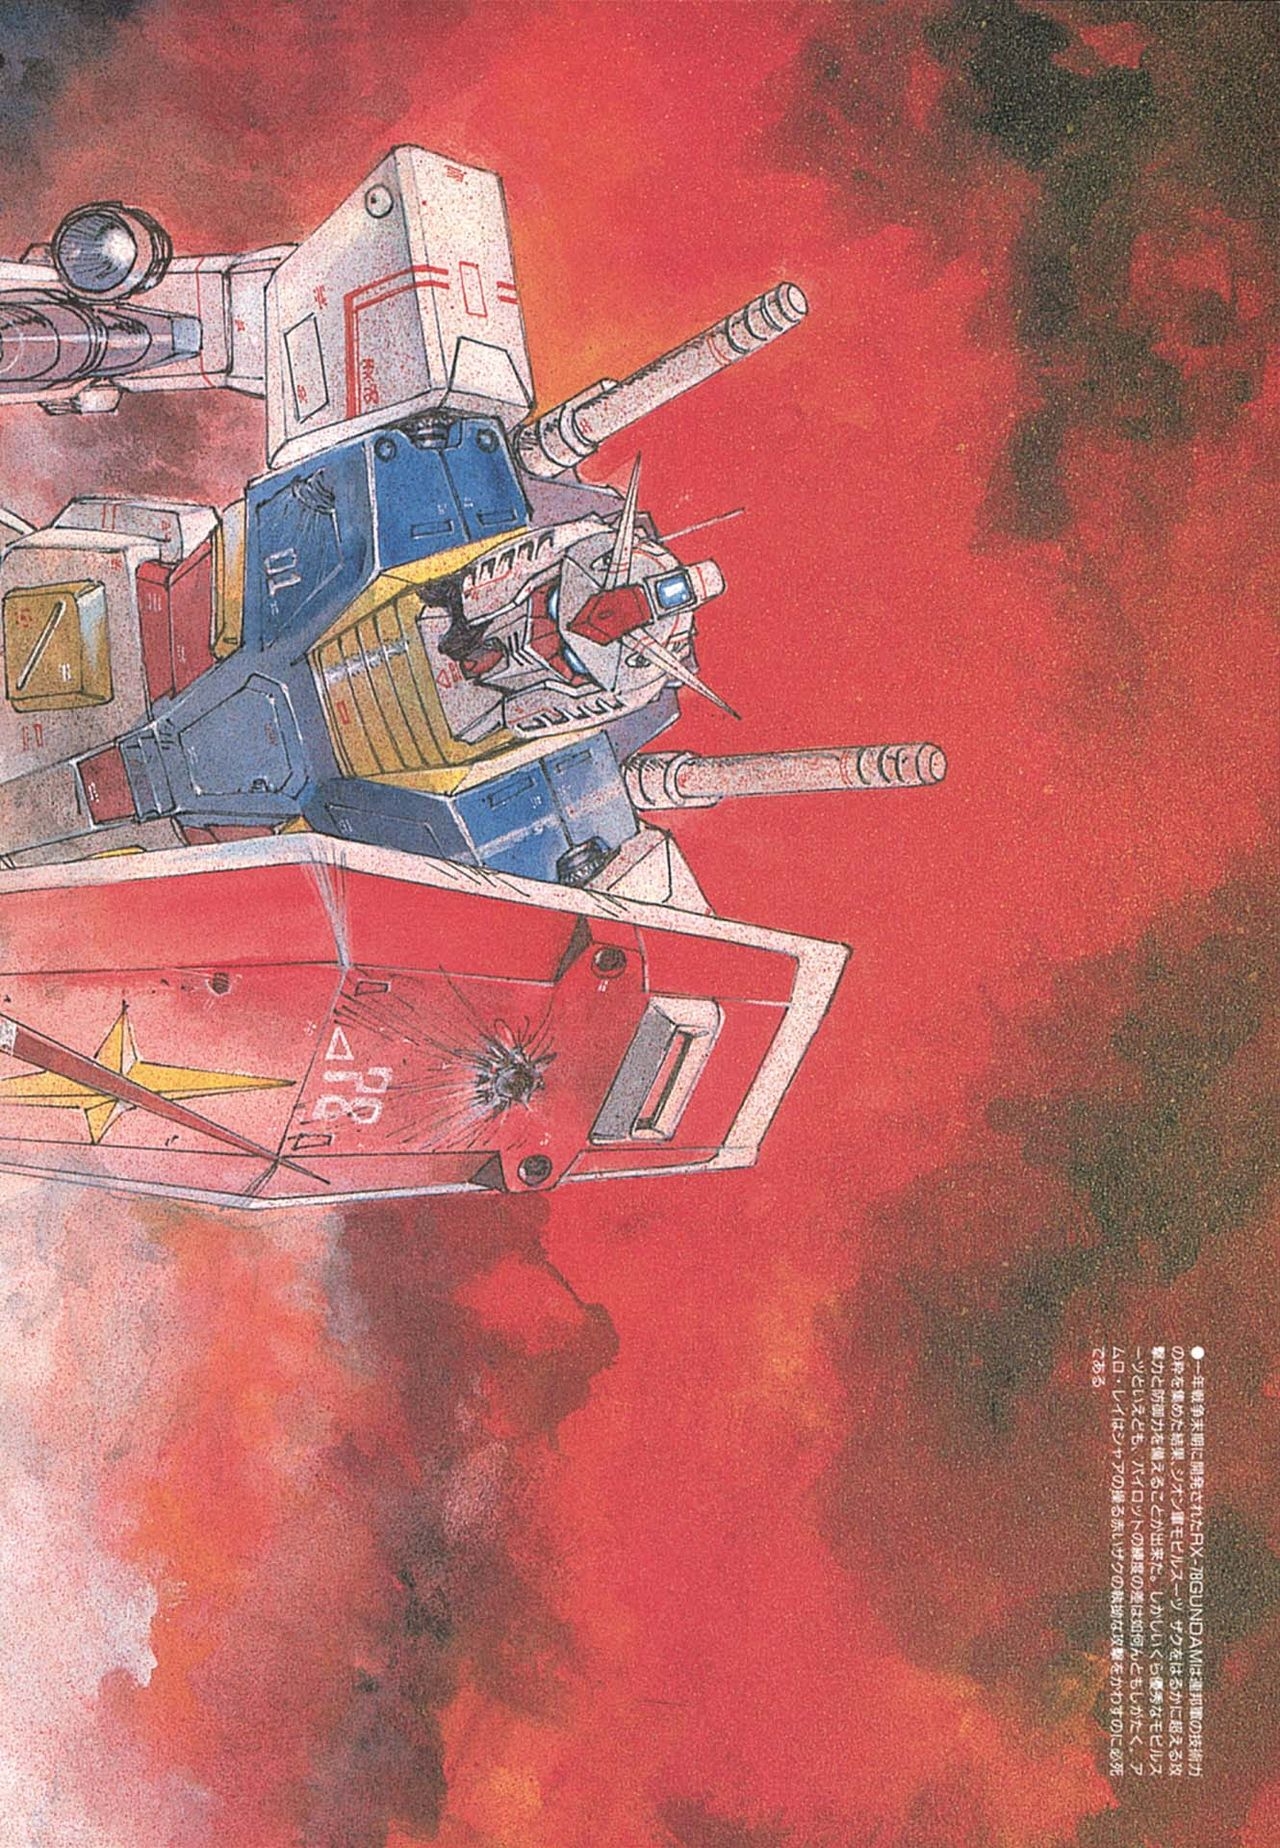 [Kazuhisa Kondo] Kazuhisa Kondo 2D & 3D Works - Go Ahead - From Mobile Suit Gundam to Original Mechanism 29